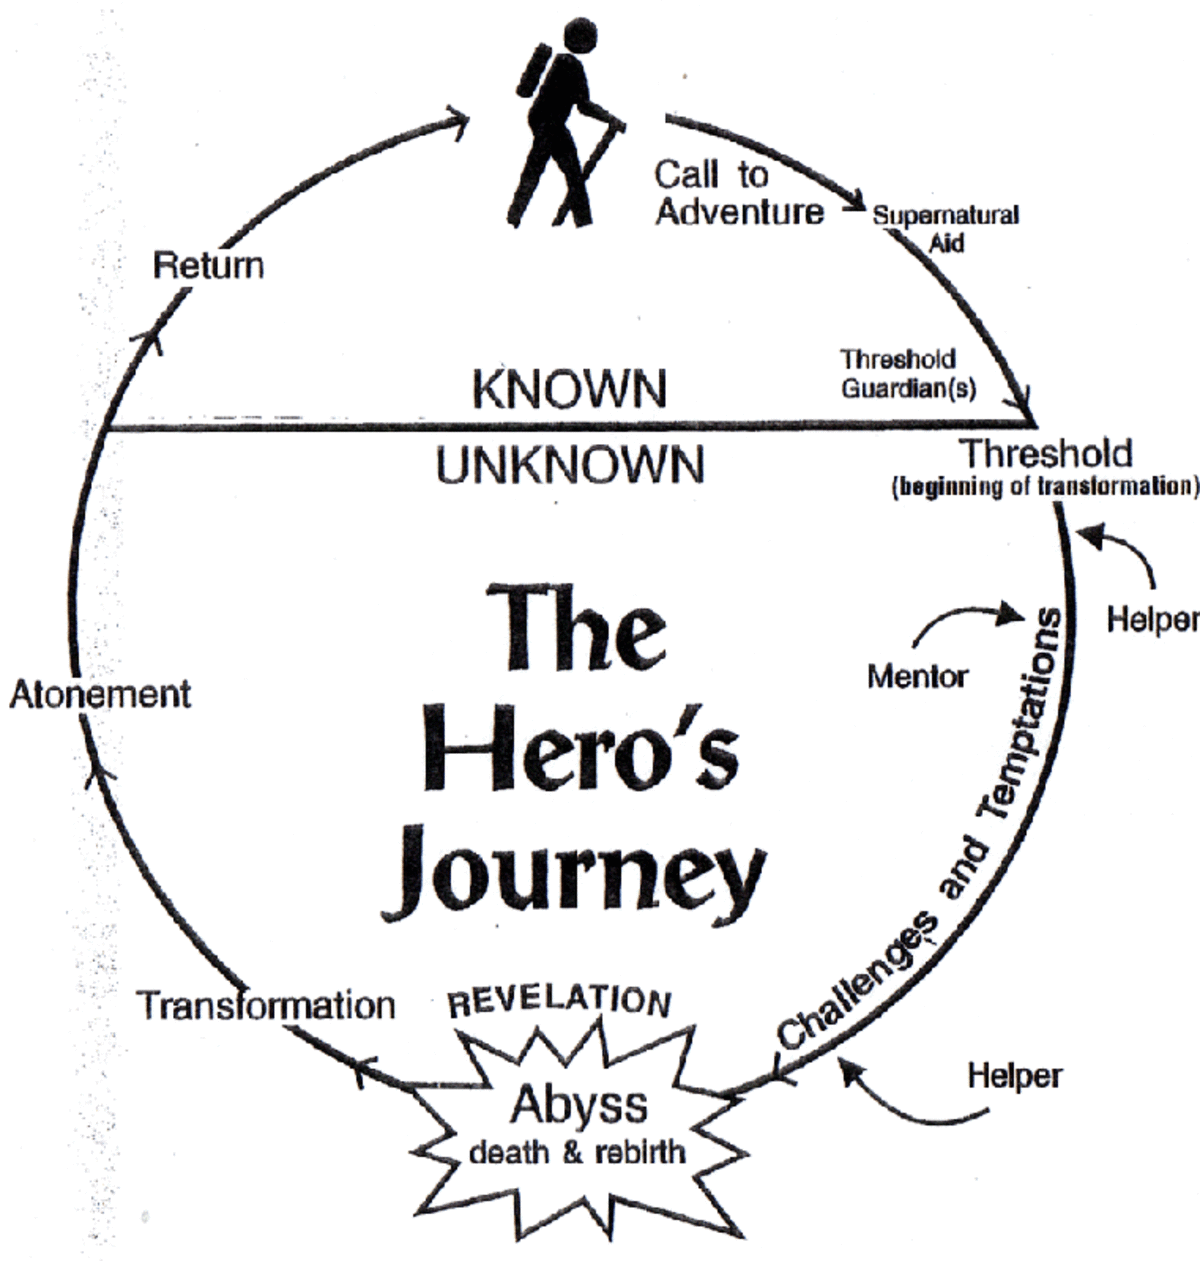 heroic journey cycle